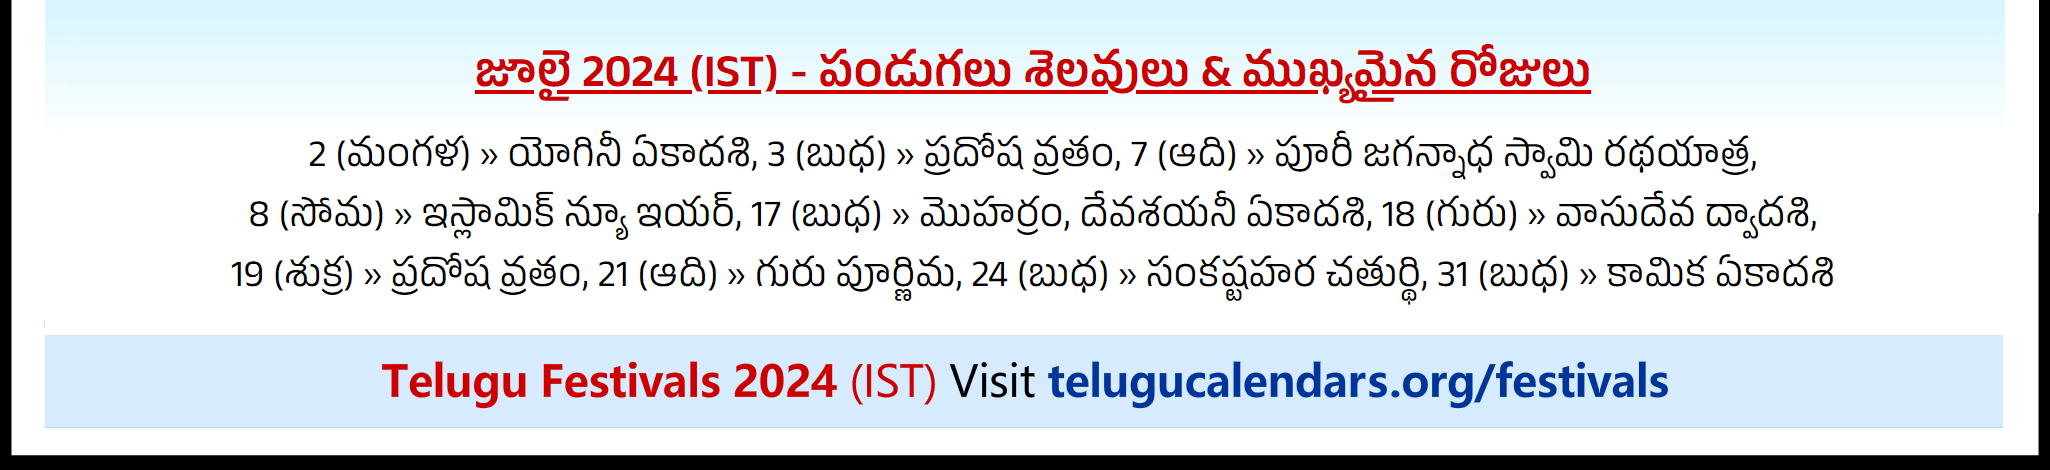 Telugu Festivals 2024 July London